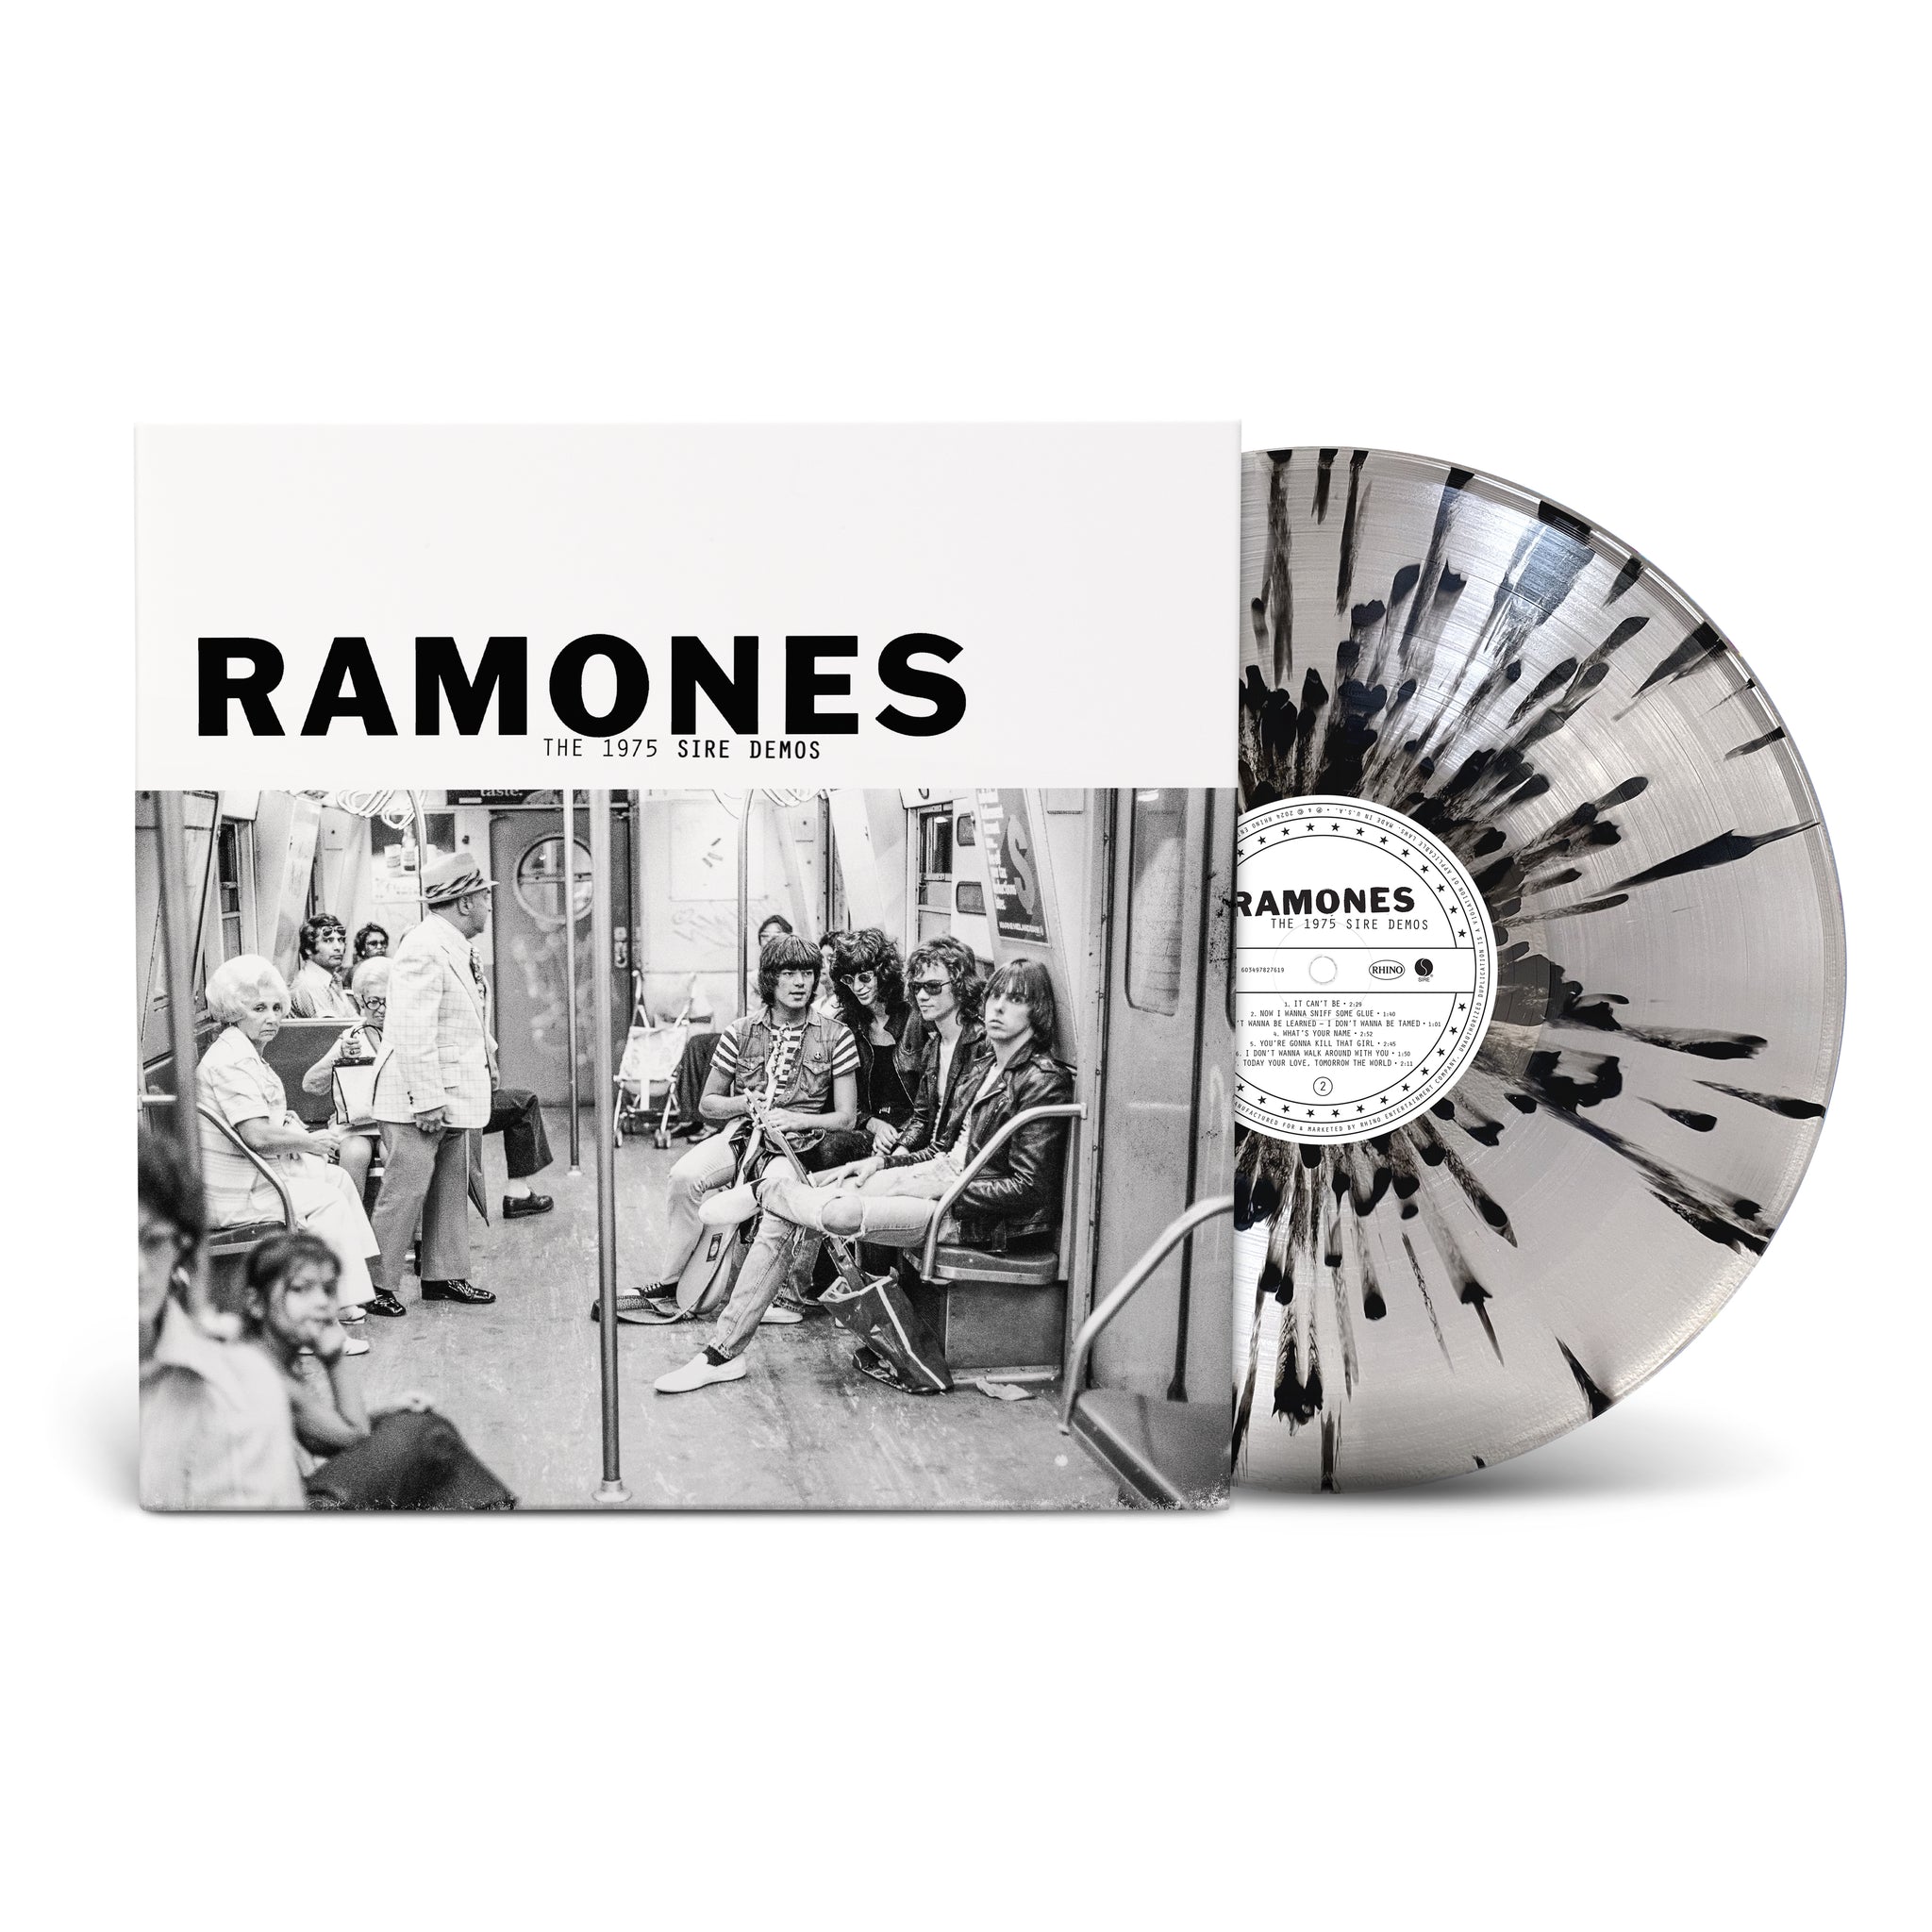 RAMONES - The 1975 Sire Demos (Demos) - 1 LP - 140g Clear with Black Splatter Vinyl  [RSD 2024]